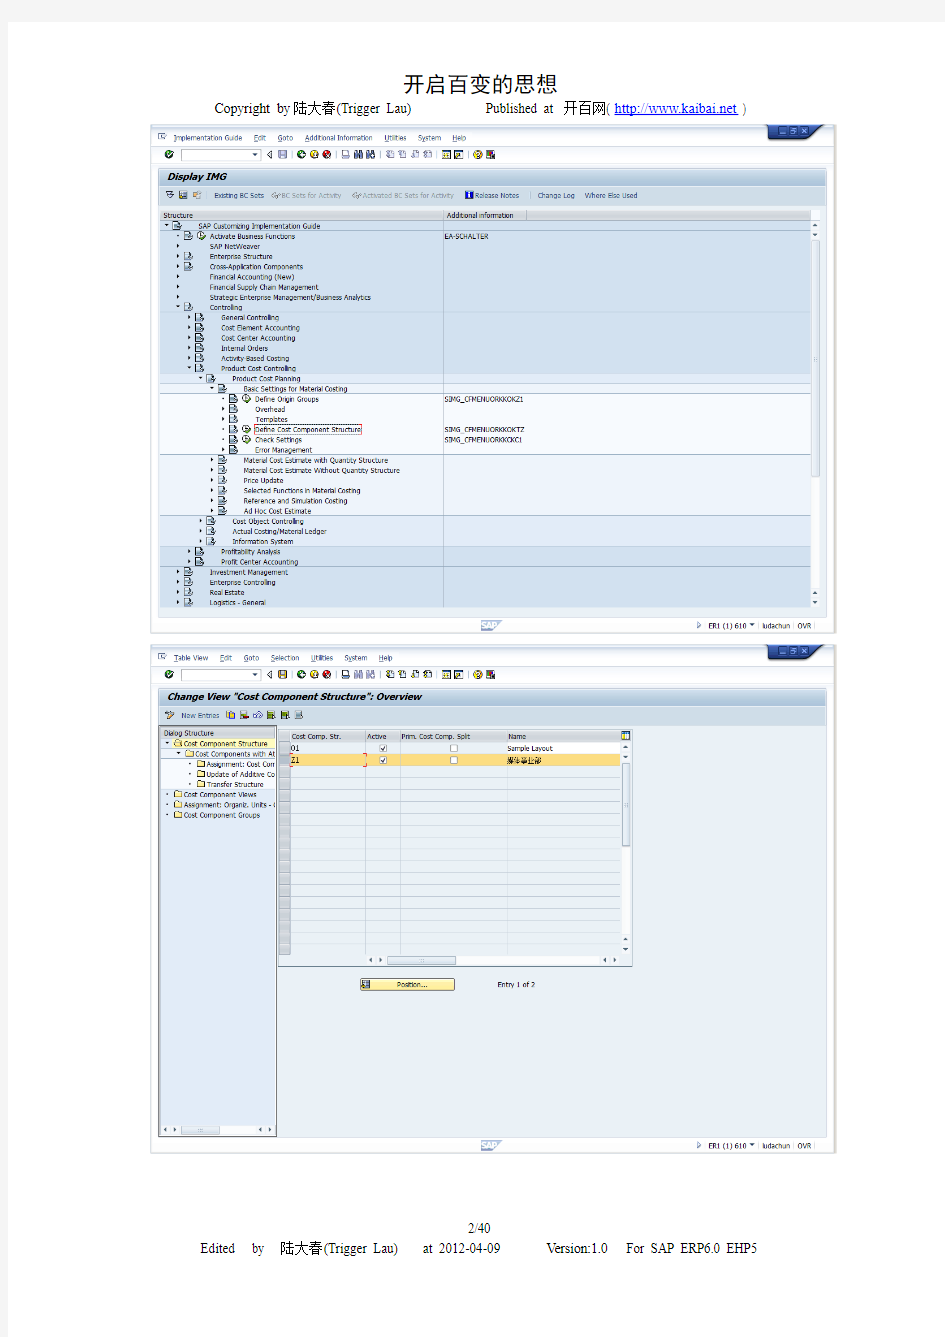 SAP_CO_PC-SAP物料标准成本计算配置及操作手册-V1.0-trigger_lau